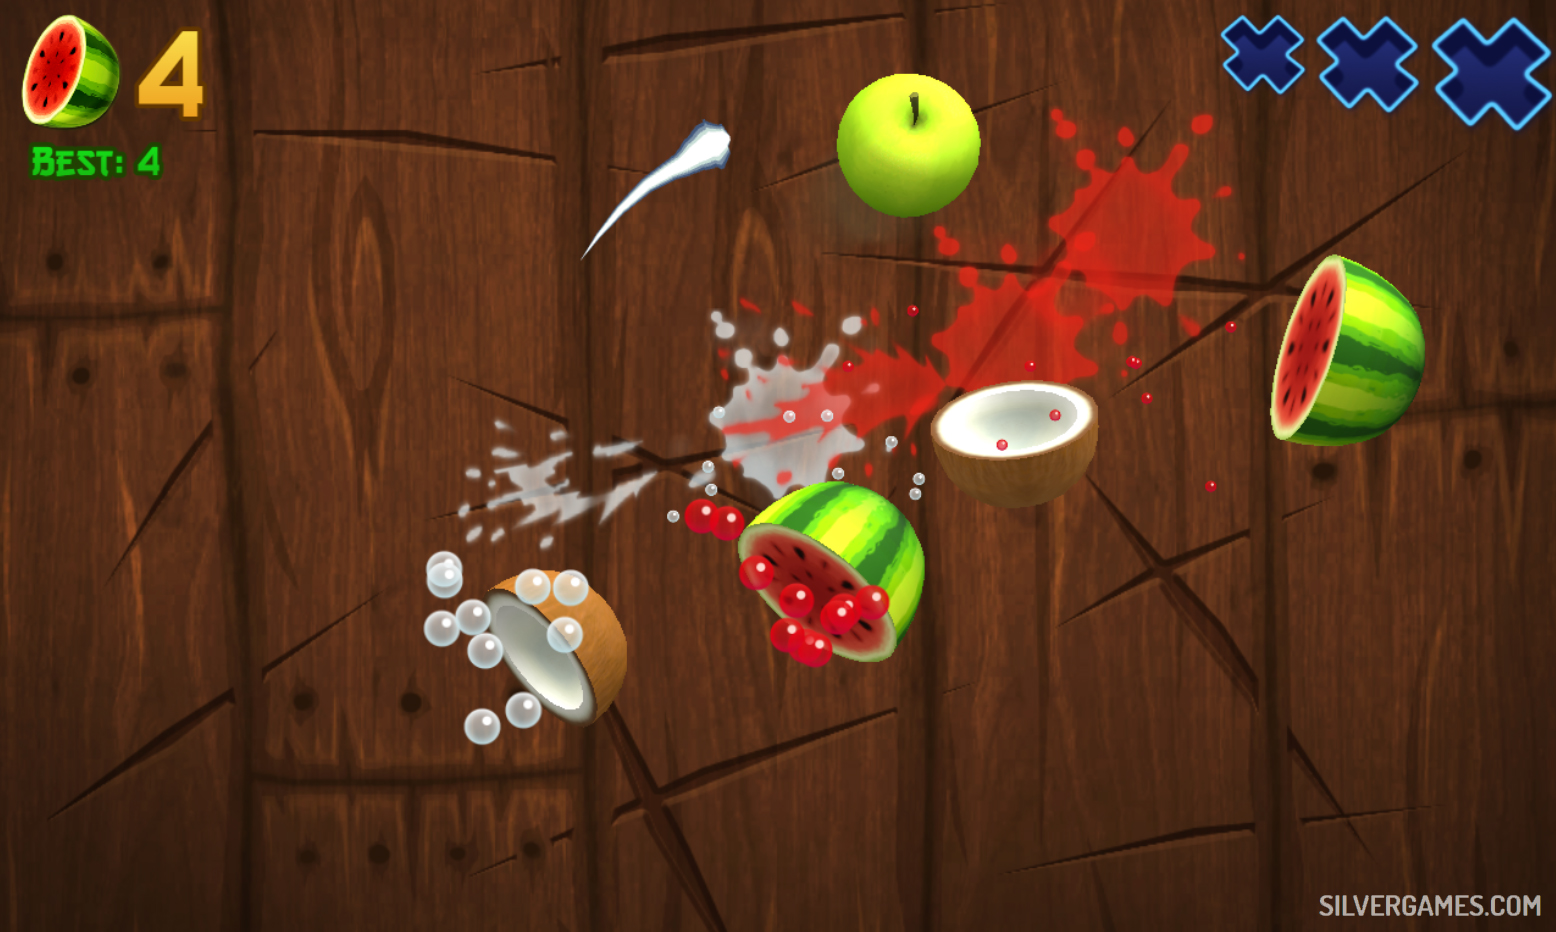 Fruit Ninja - Play Fruit Ninja Online on SilverGames